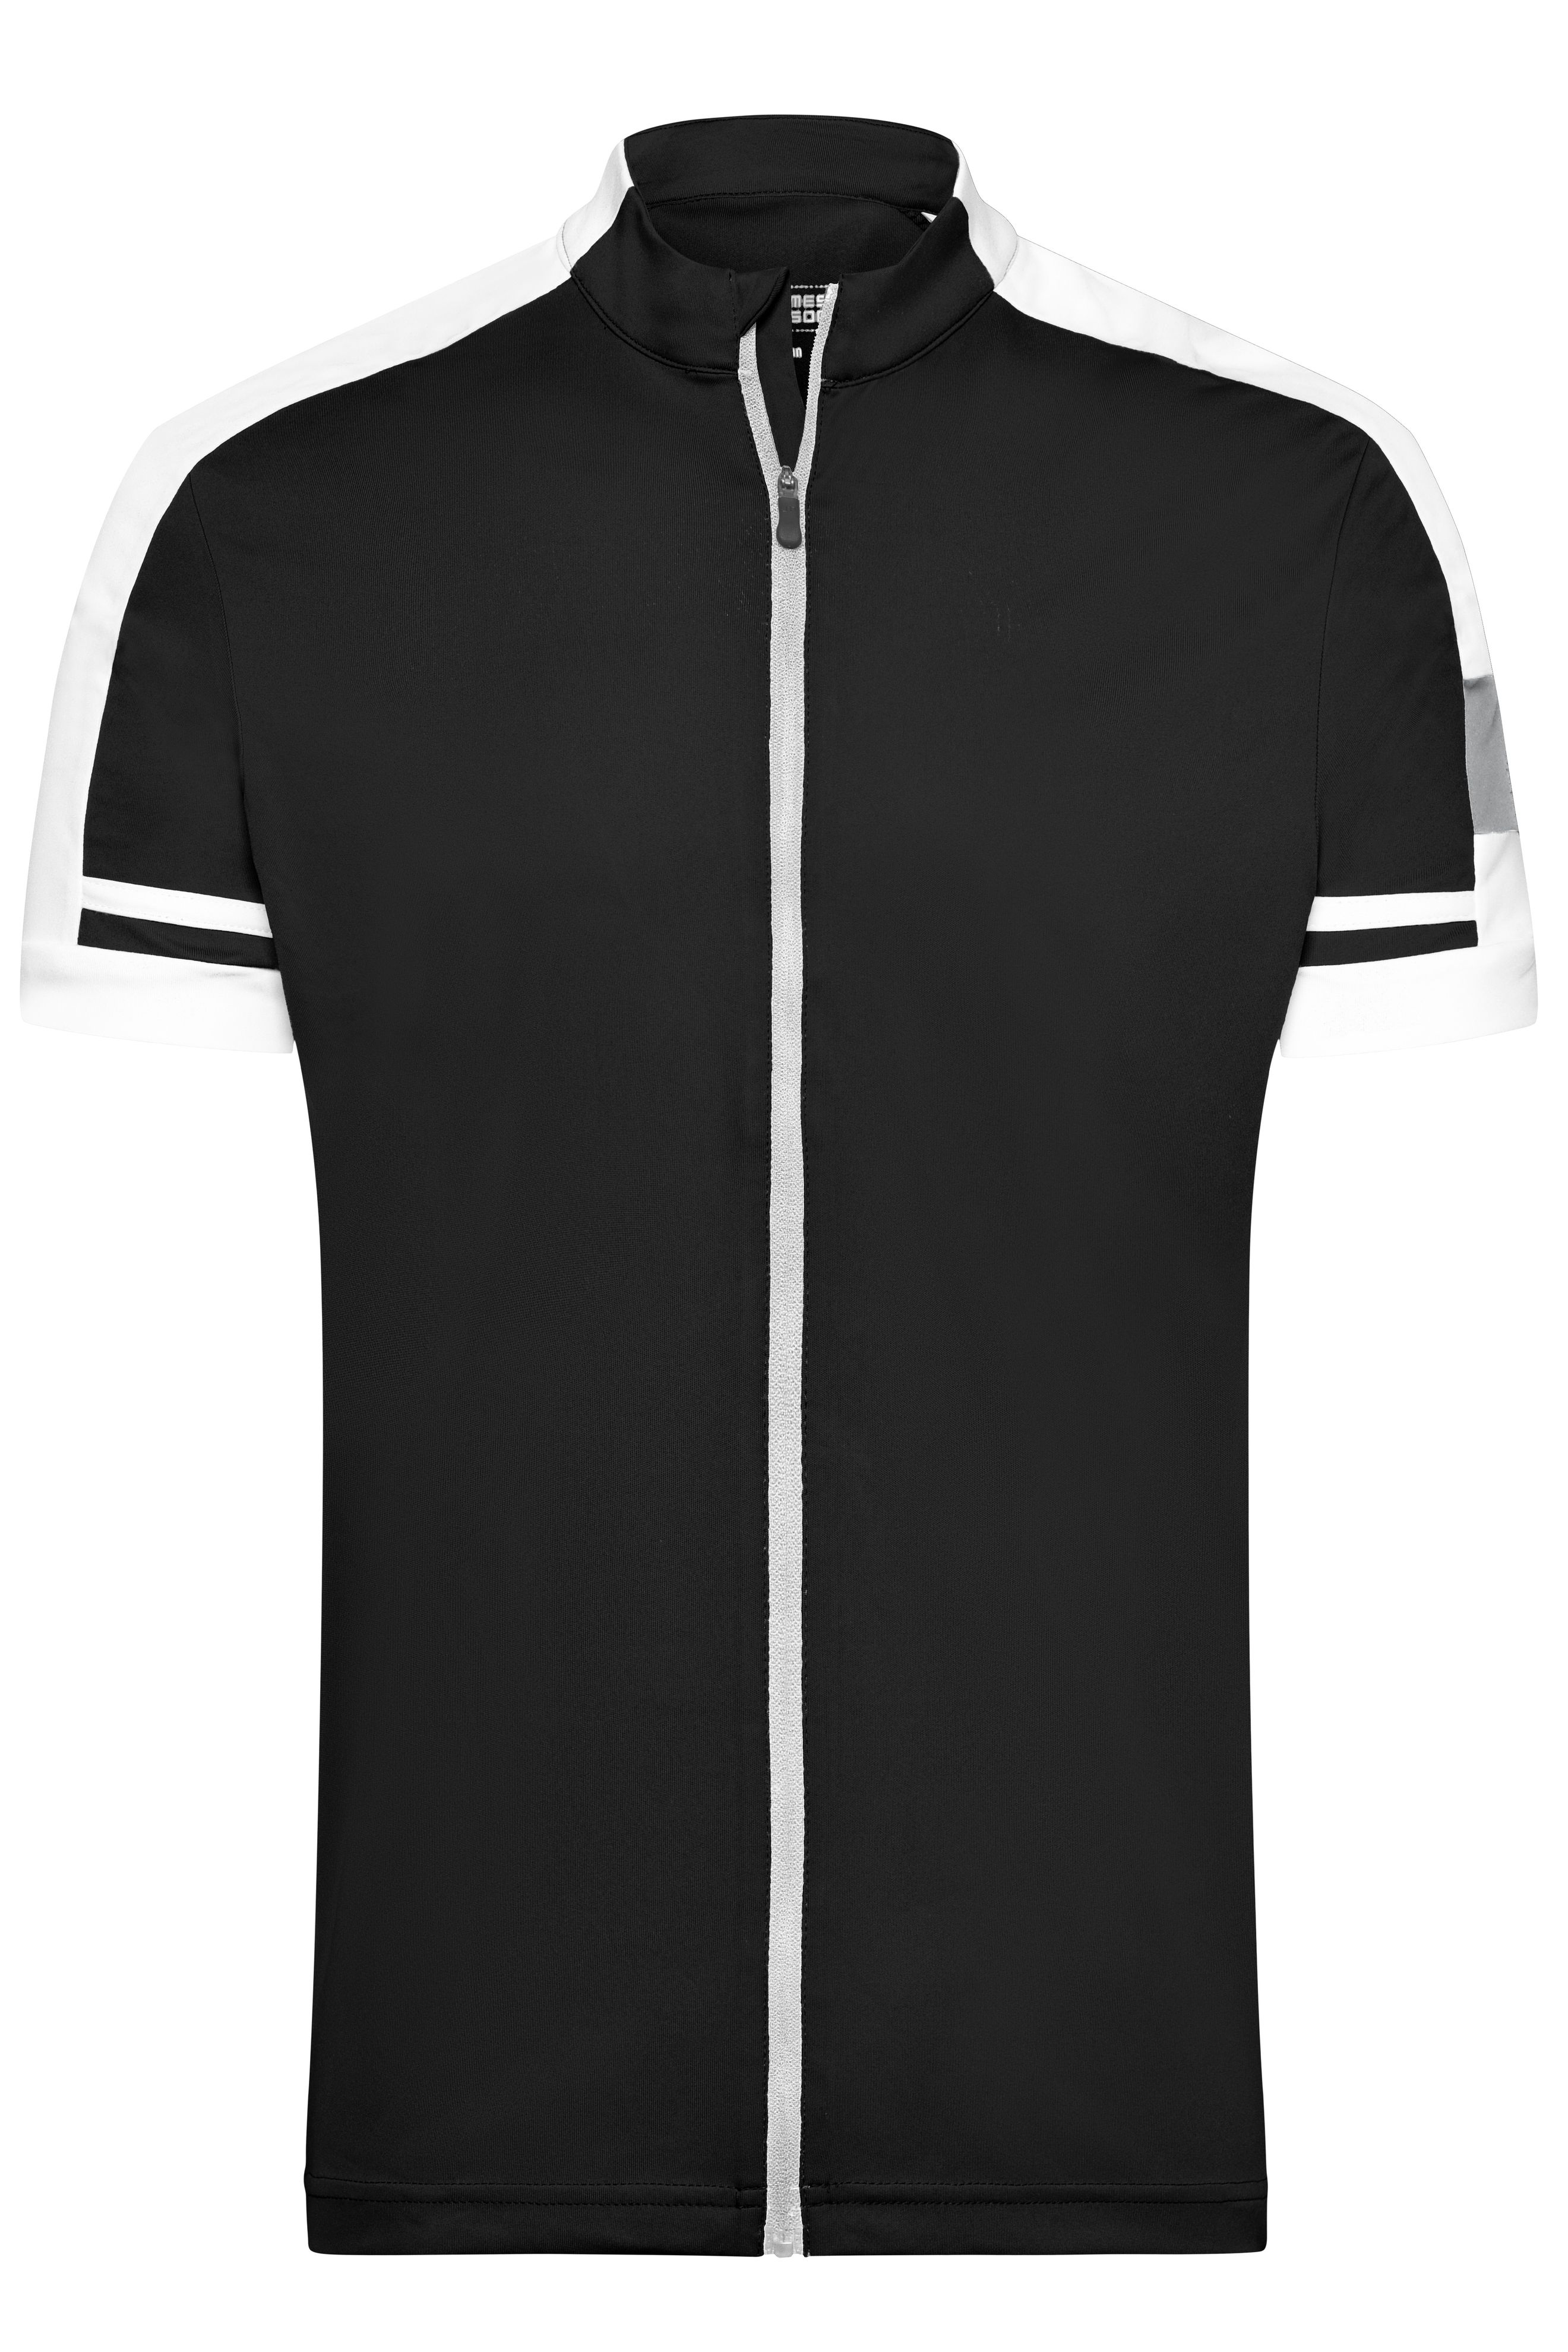 Herren Cooldry® Rad Shirt Longzip